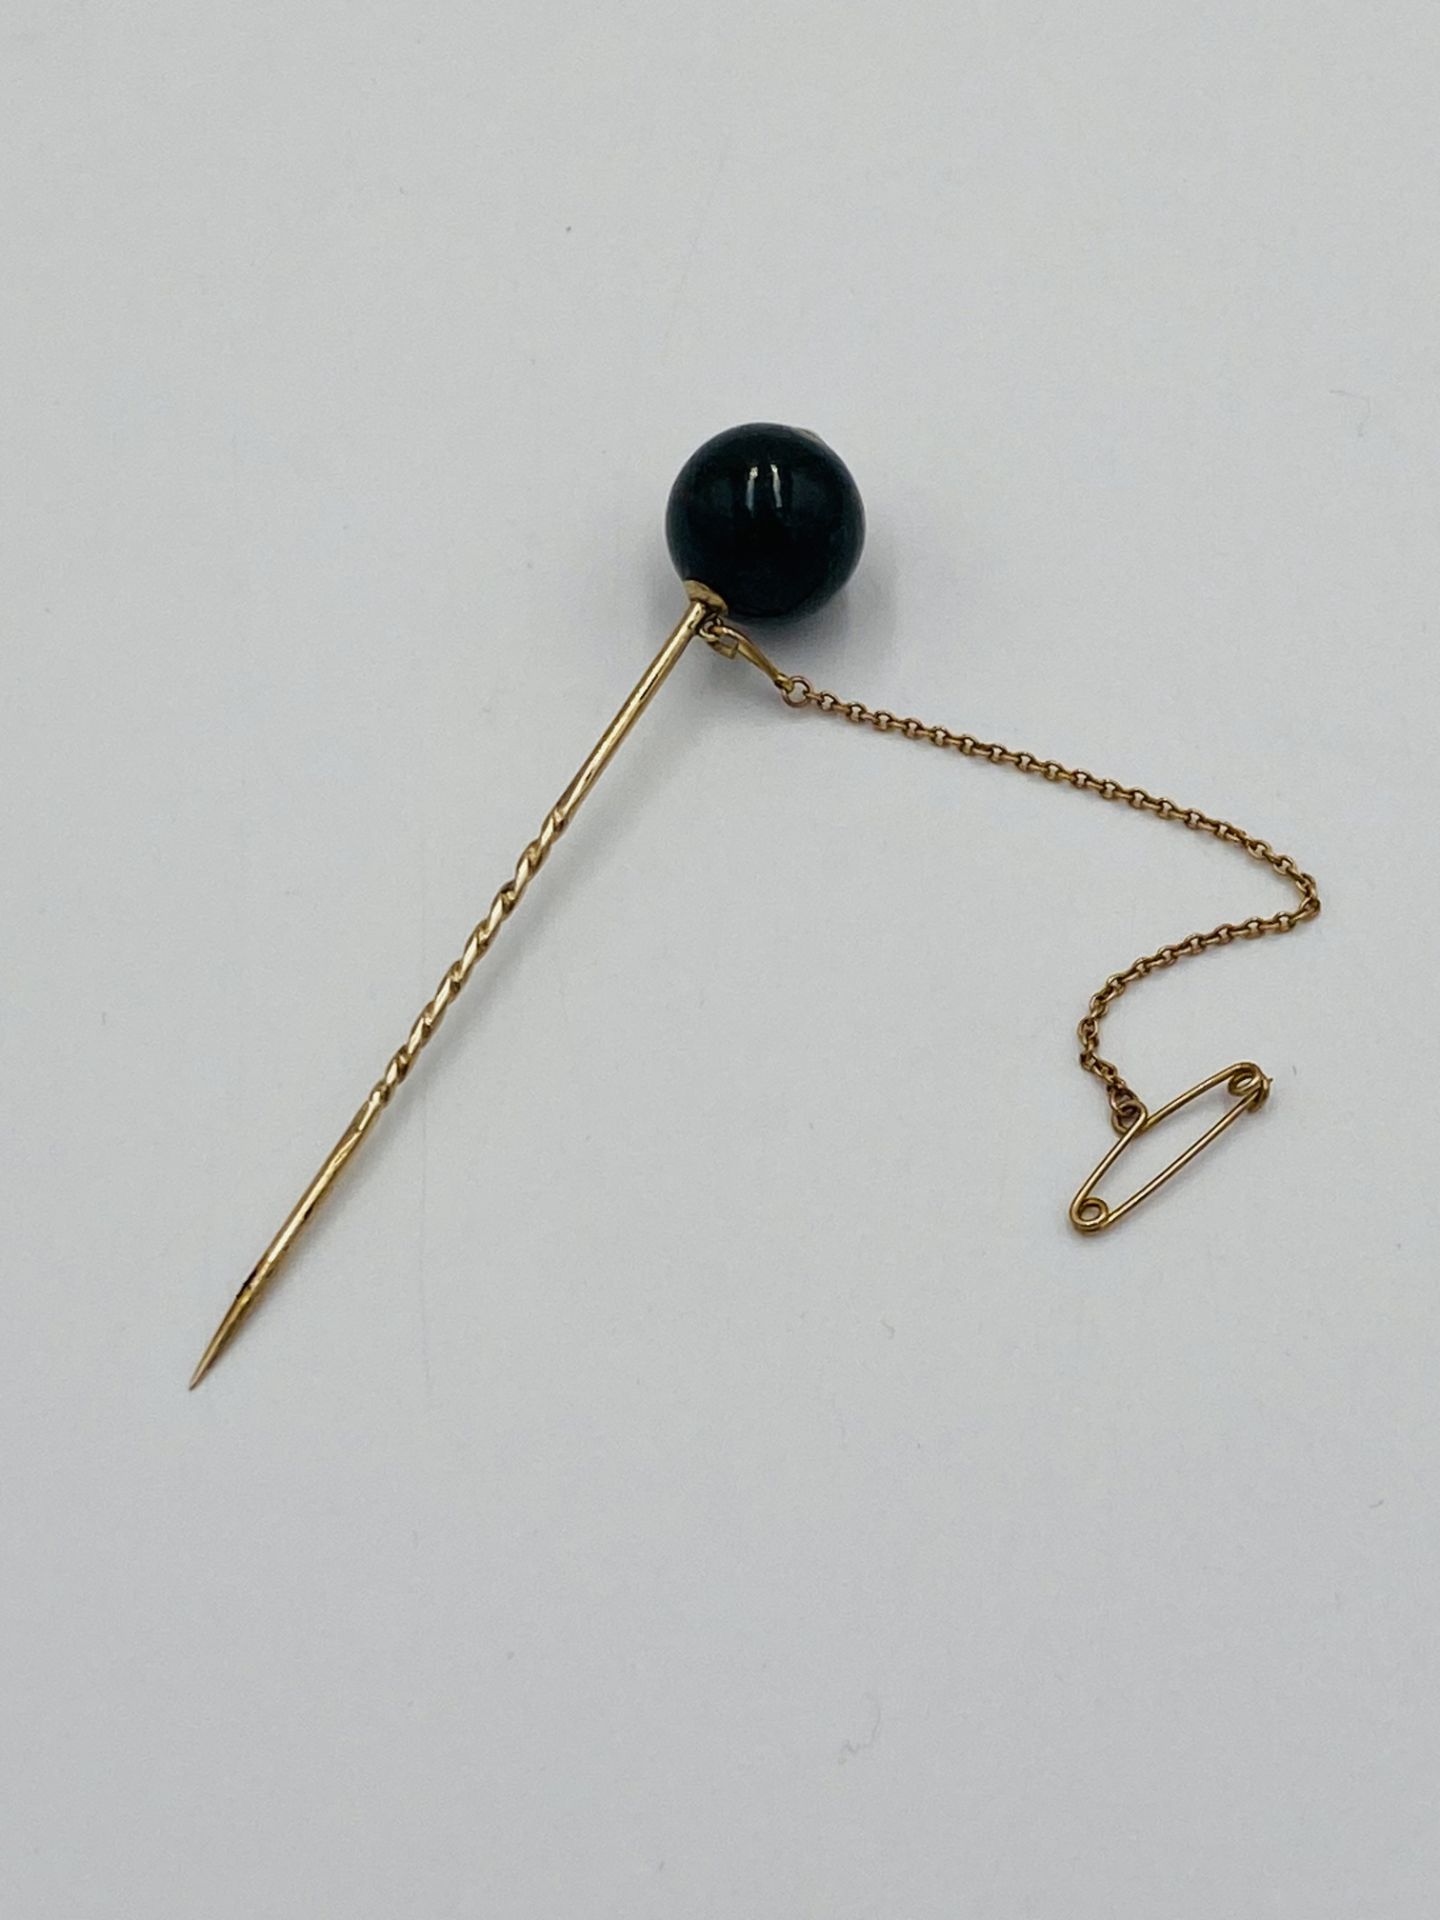 Bloodstone stick pin - Image 2 of 4